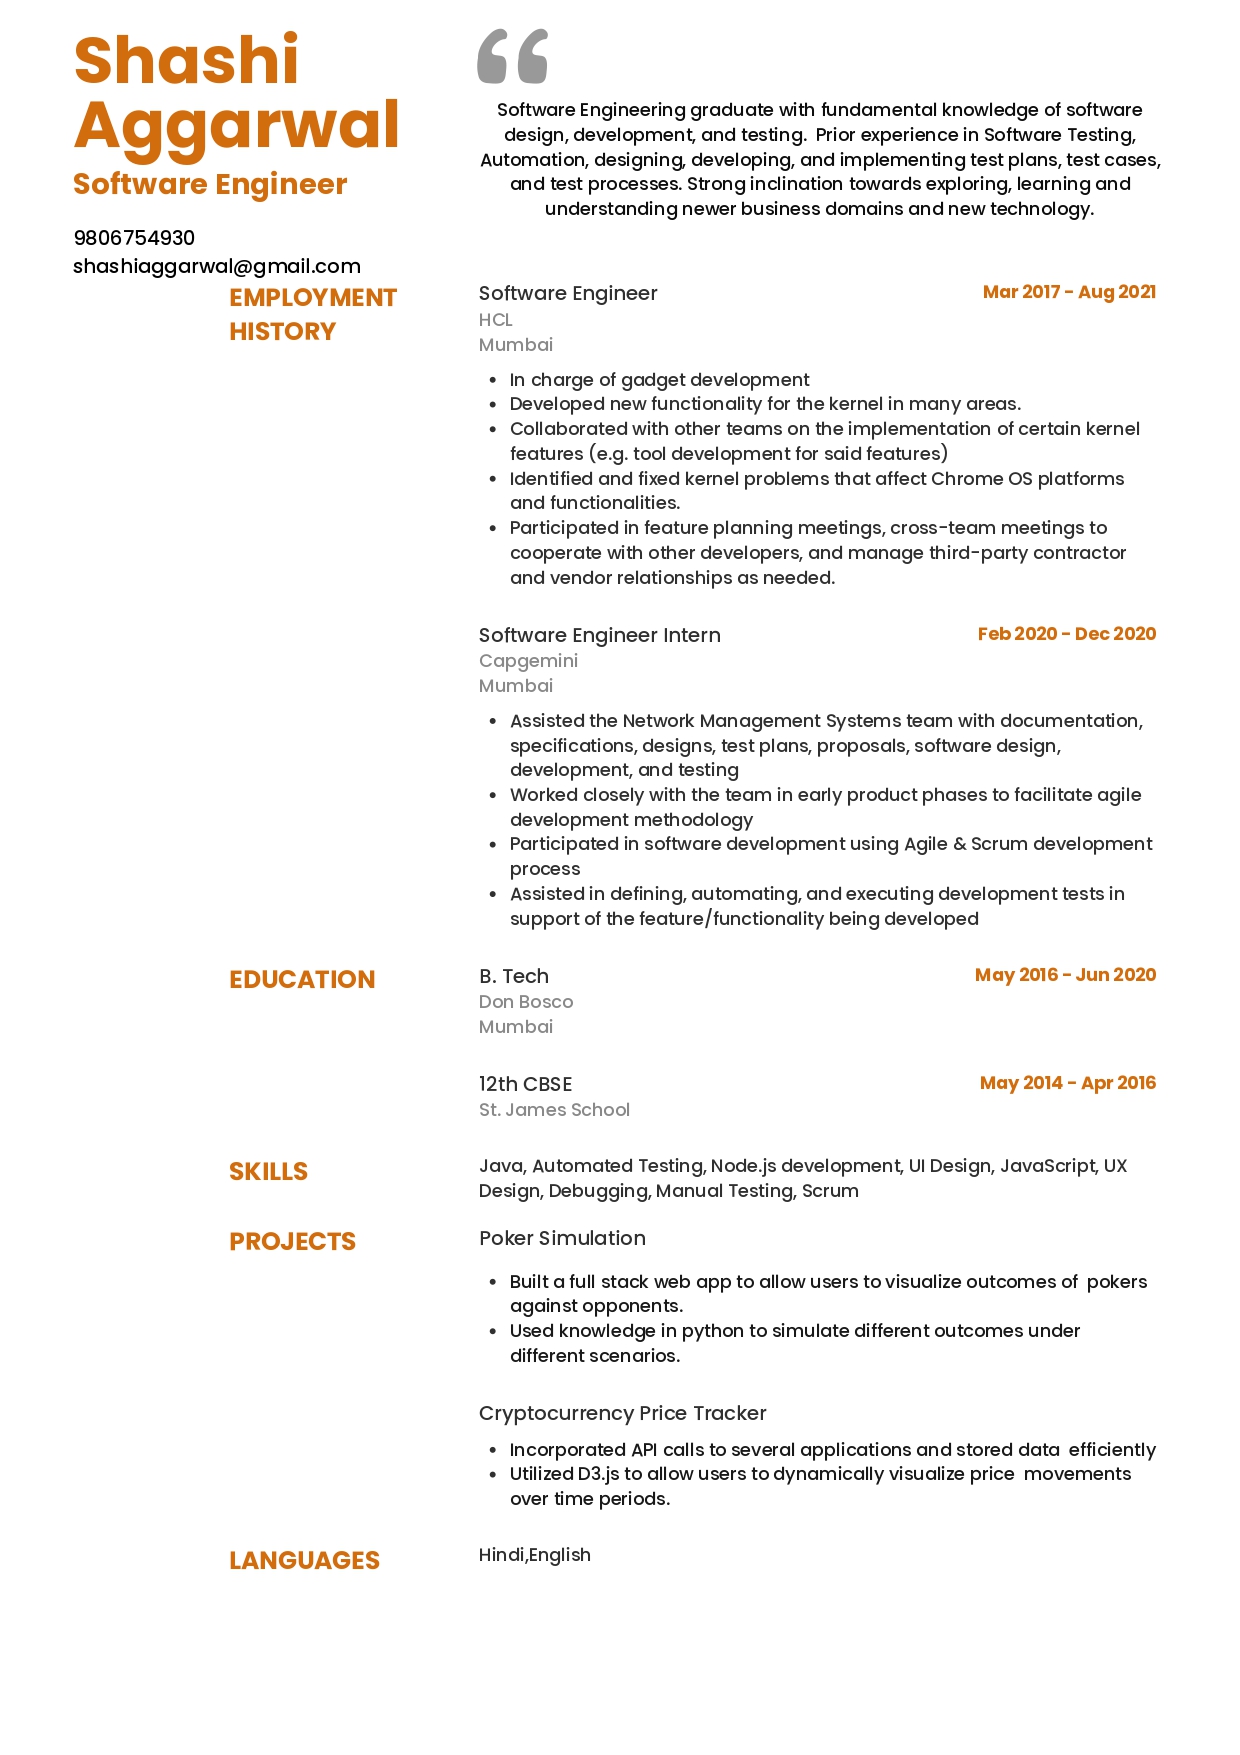 Resume of Software Engineer